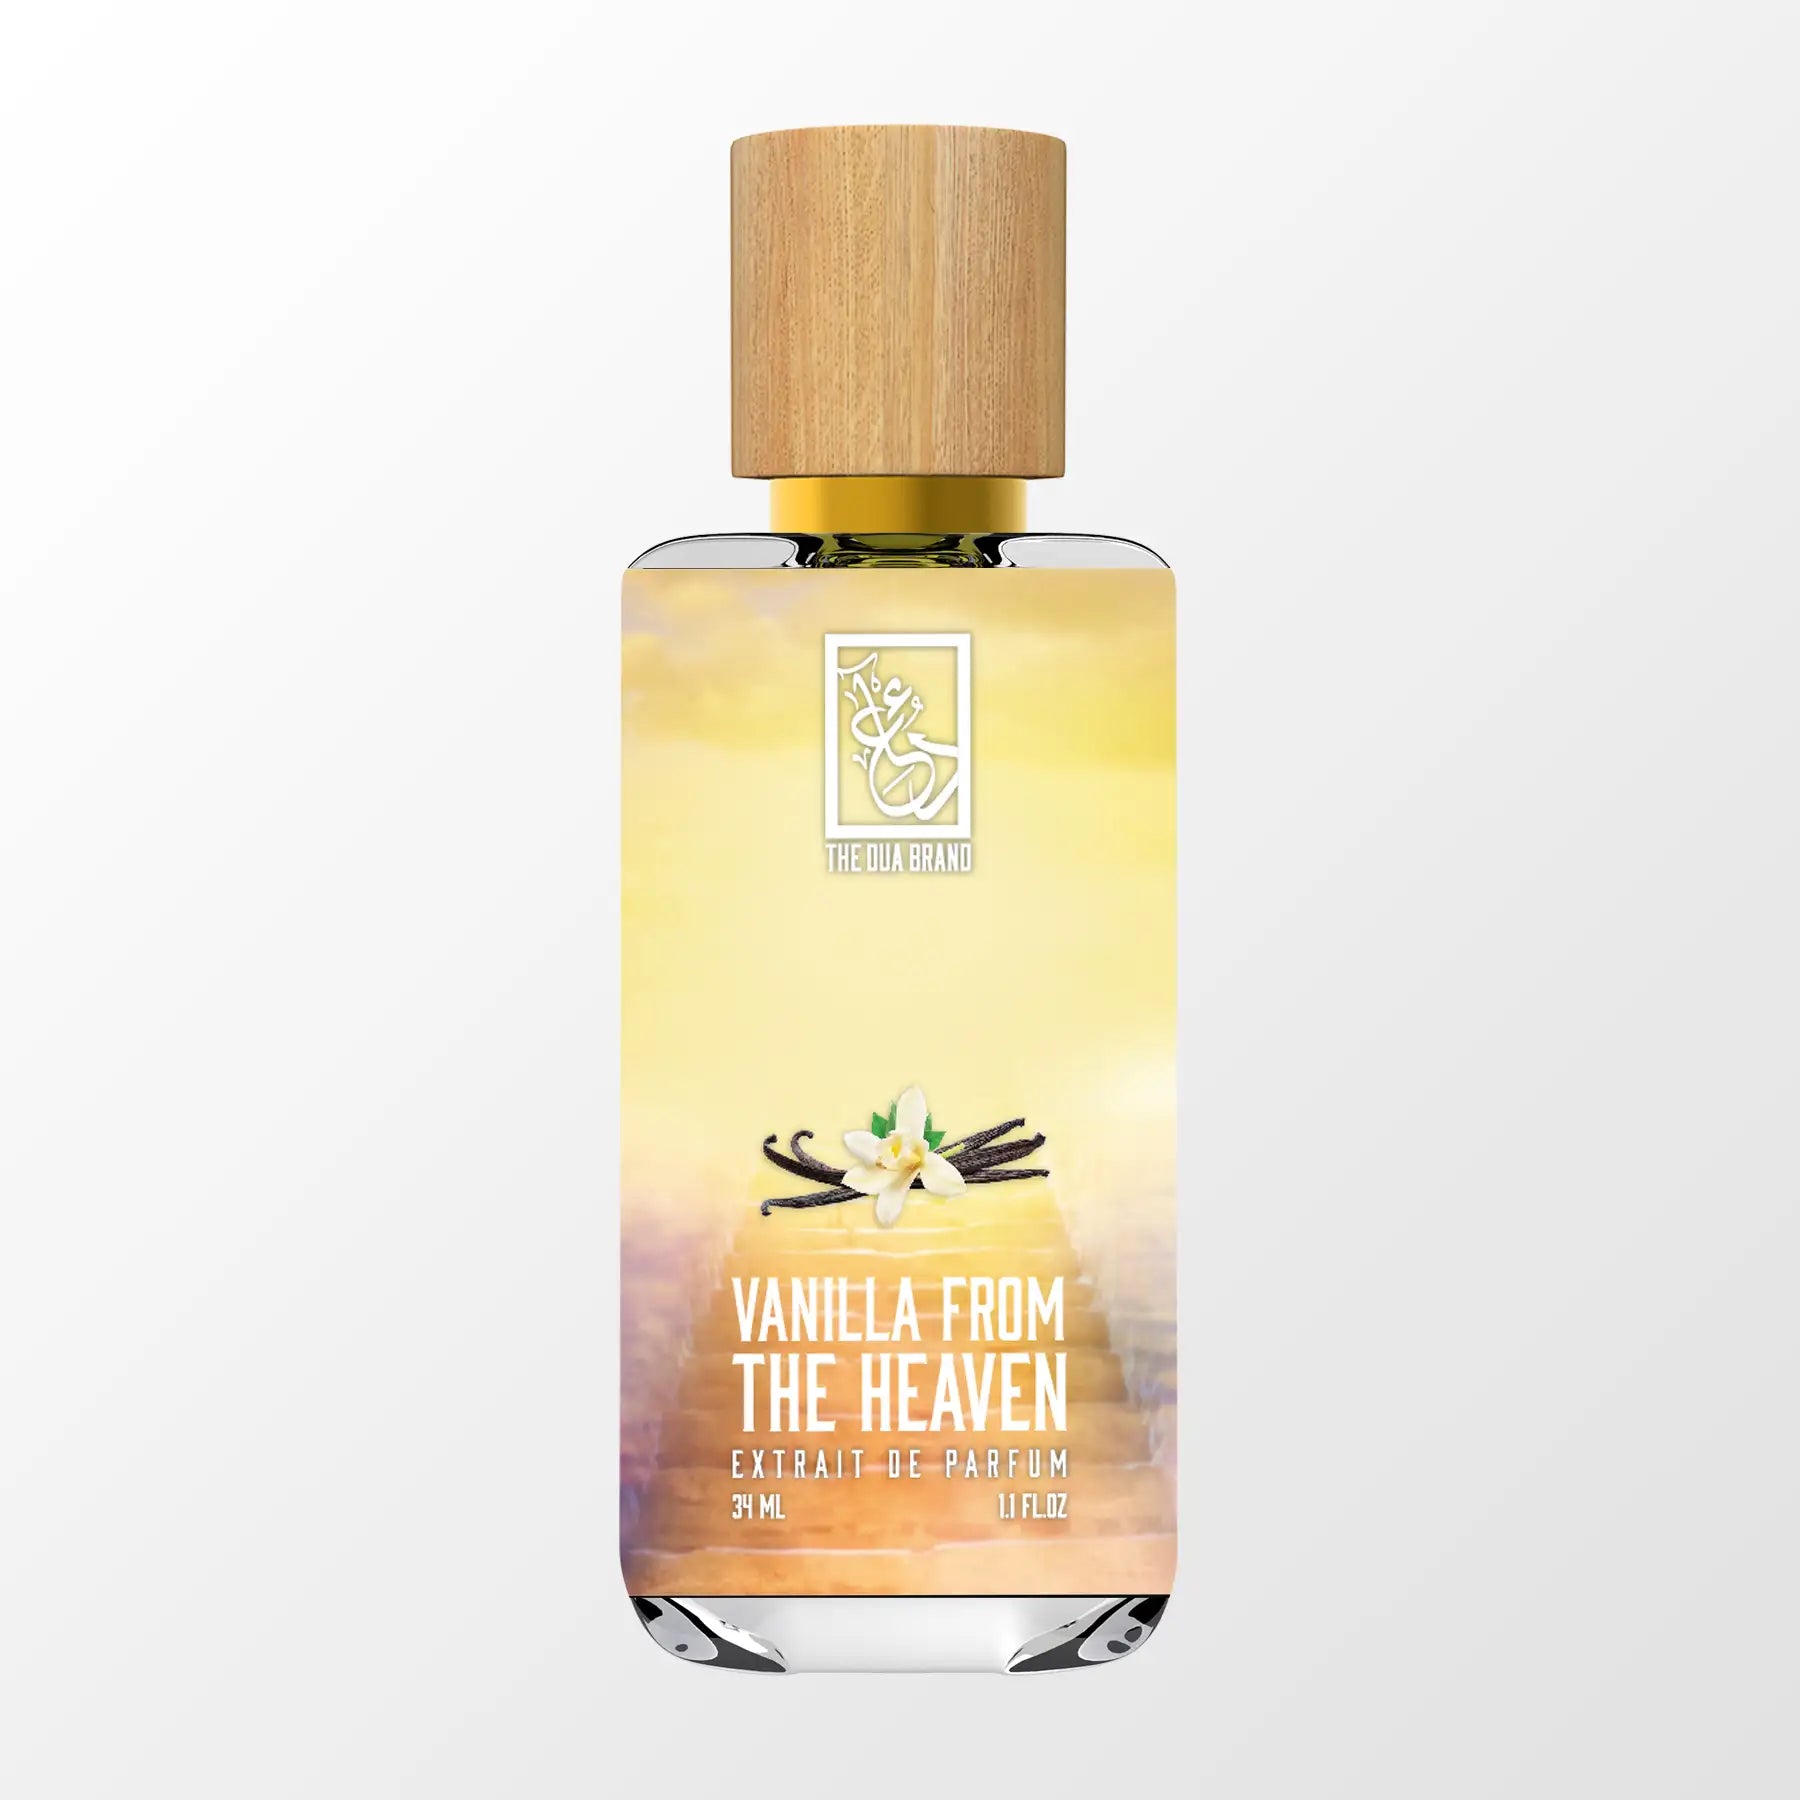 Vanilla Bean Fragrance Oil 10ml – SCENTA